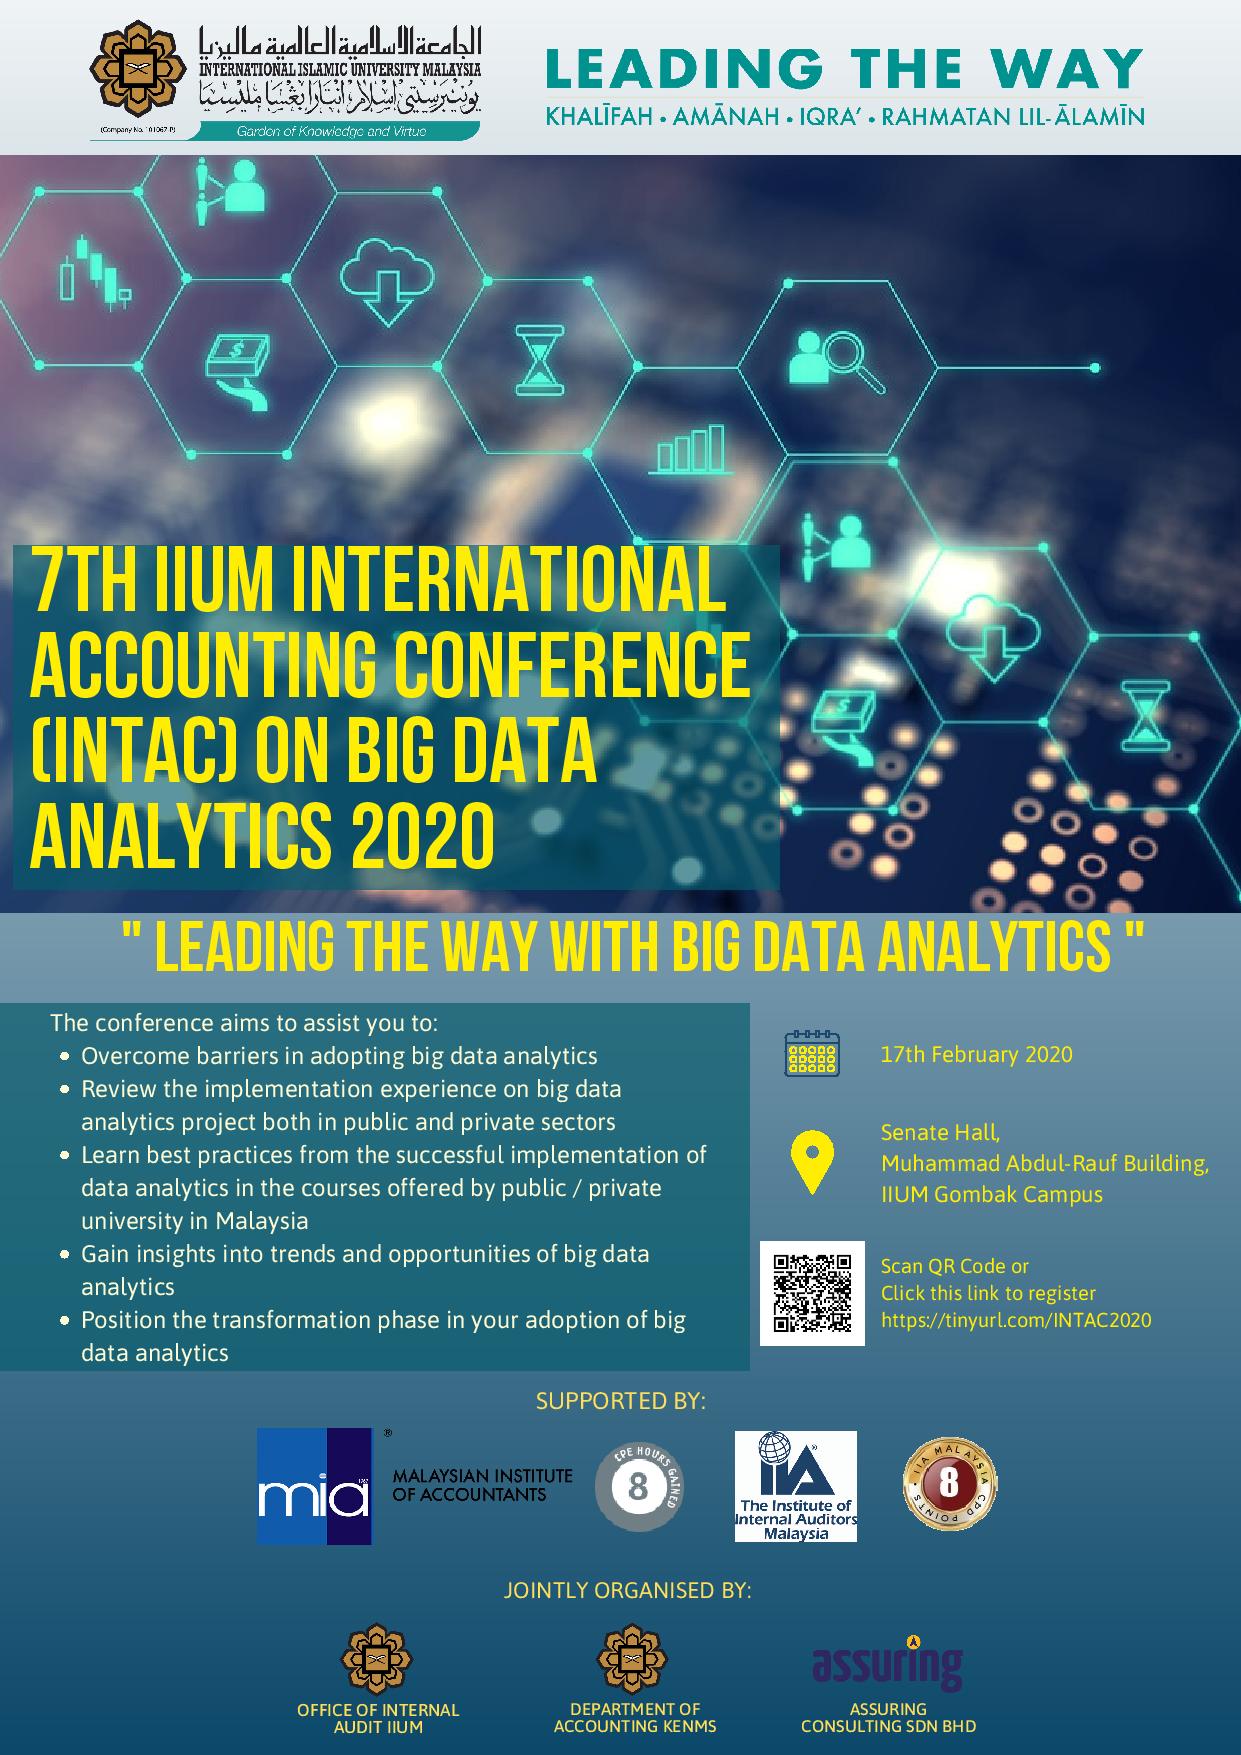 7TH IIUM INTERNATIONAL ACCOUNTING CONFERENCE ON BIG DATA ANALYTICS (INTAC 2020): LEADING THE WAY WITH BIG DATA ANALYTICS